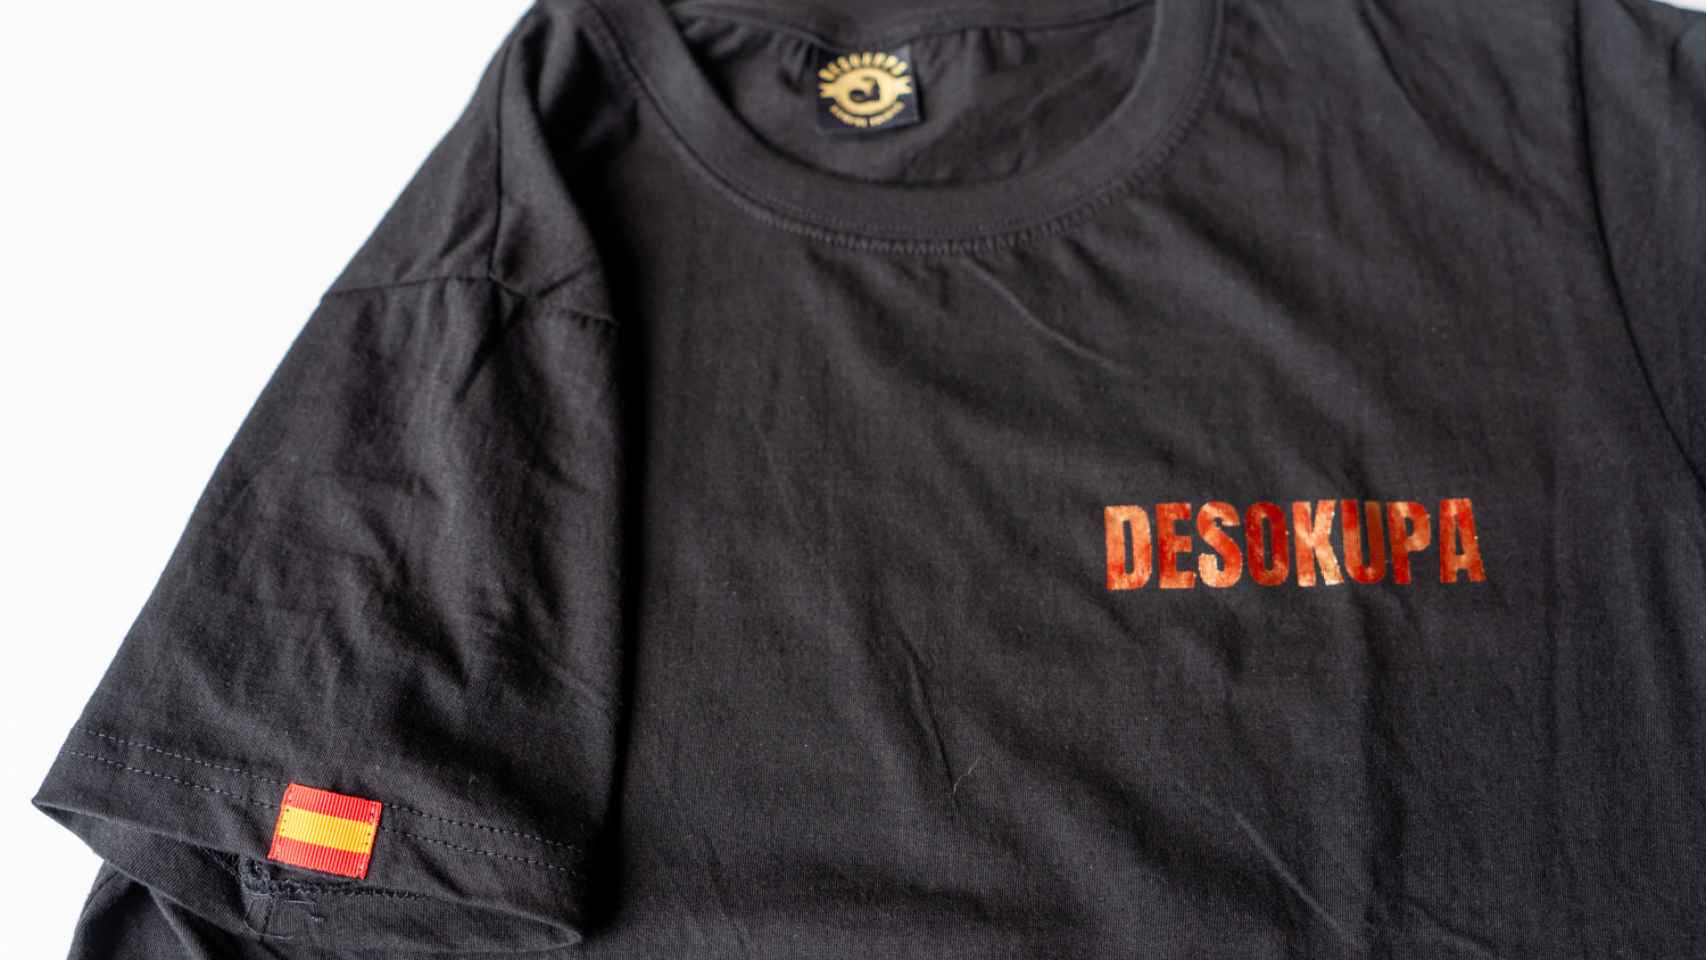 Camiseta sin etiquetado de Desokupa